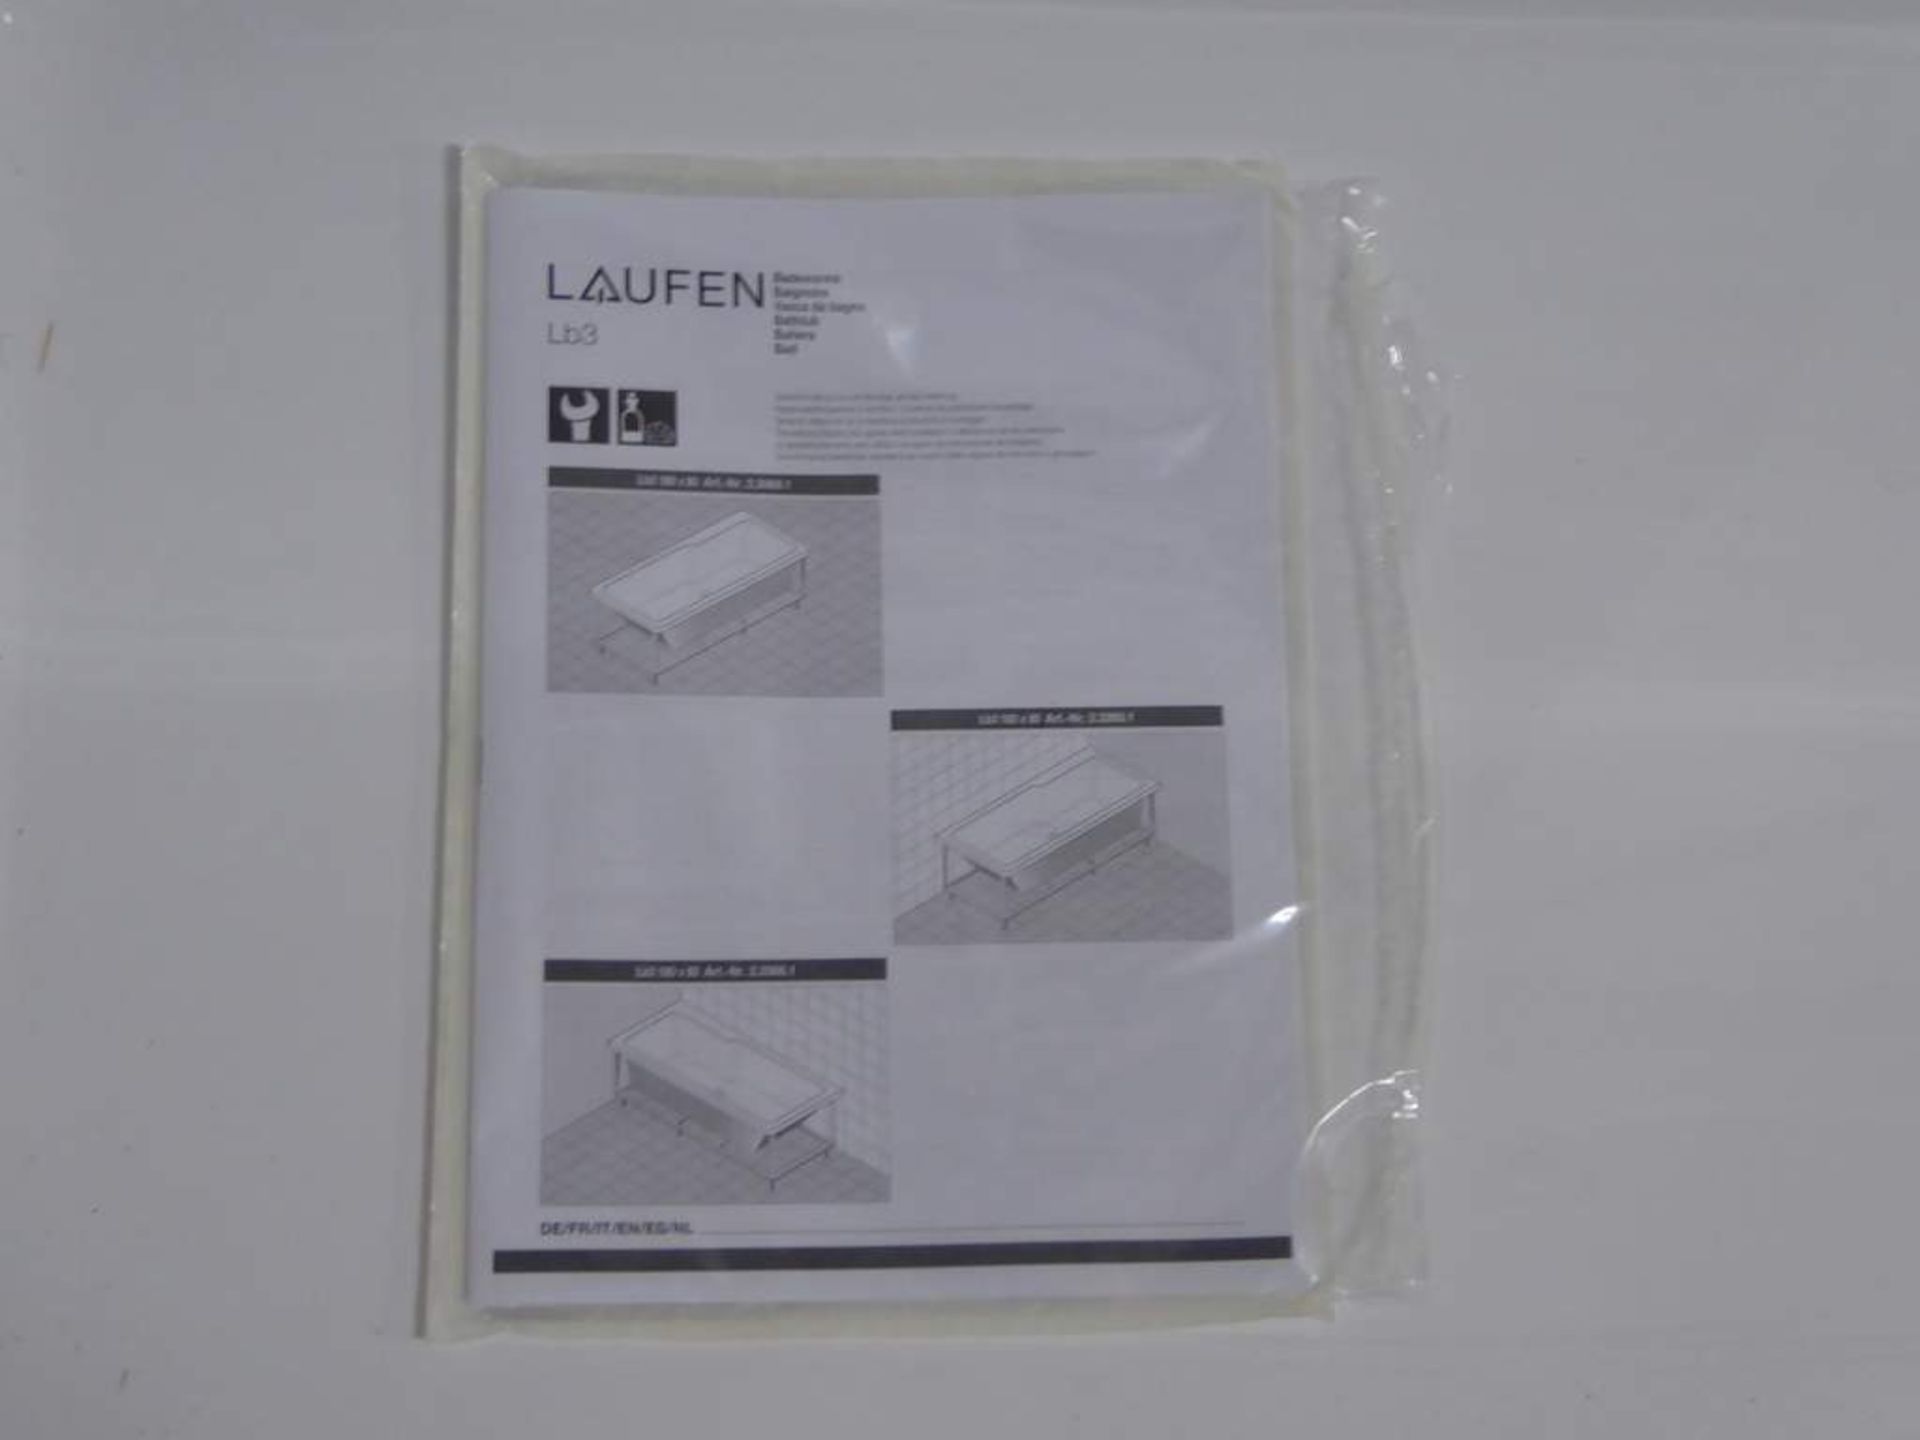 Laufen LB3 180x80cm bath - Image 4 of 4